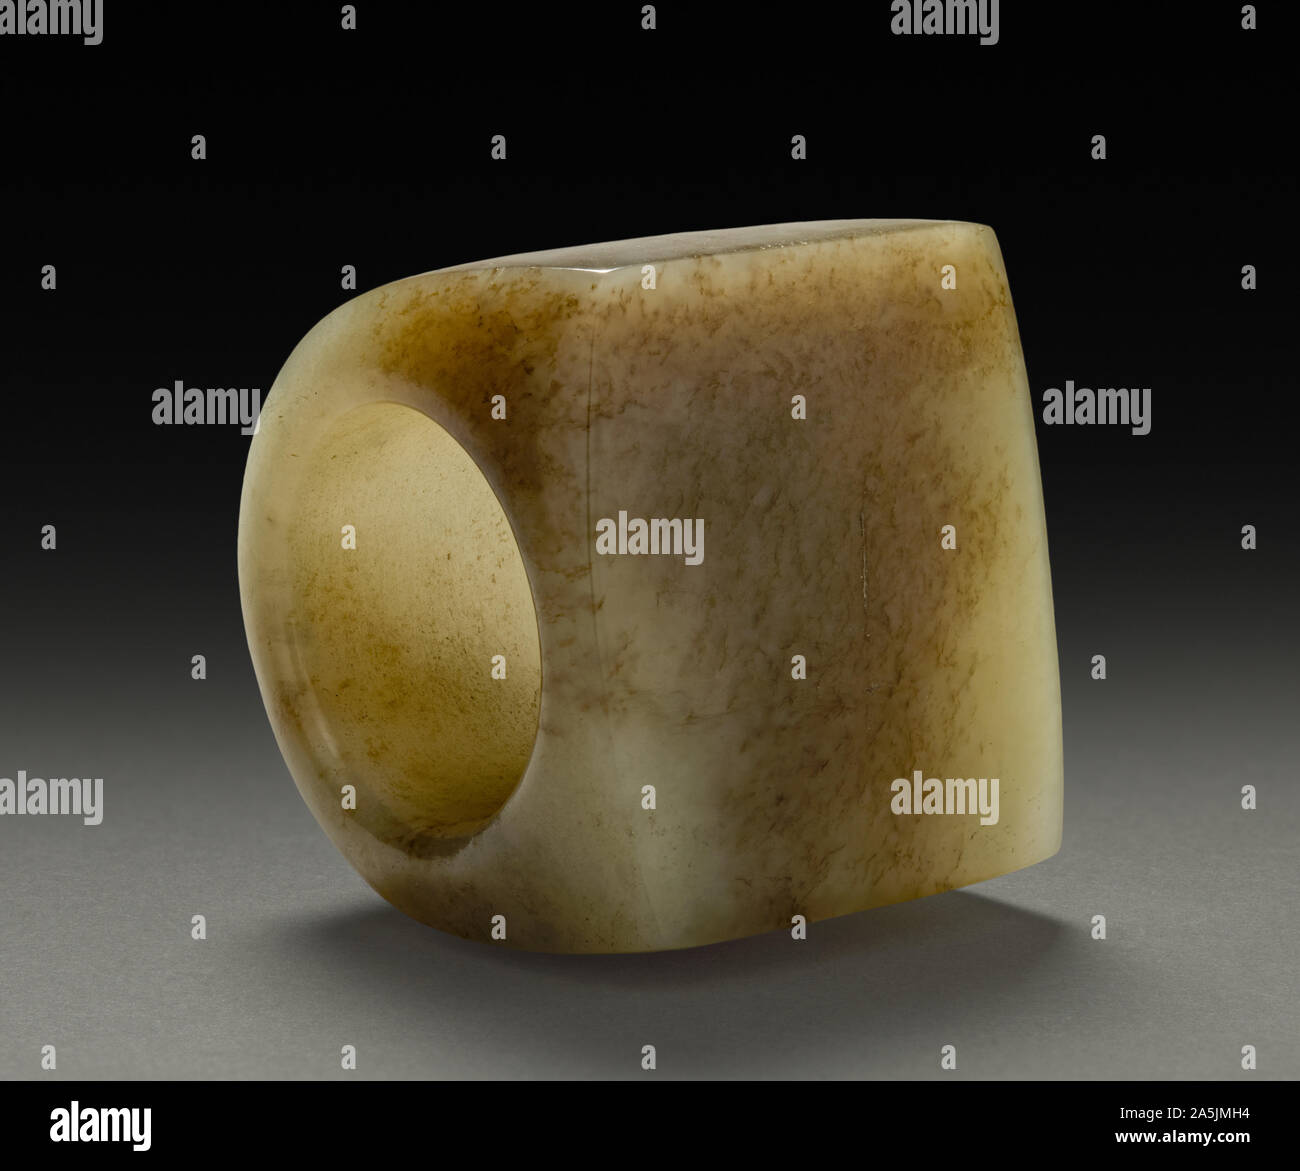 https://clevelandart.org/art/Thumb Ring, 1736-95. China, Qing dynasty (1644-1911), Qianlong reign (1736-1795). Jade.jpg - 2A5JMH4 Stock Photo